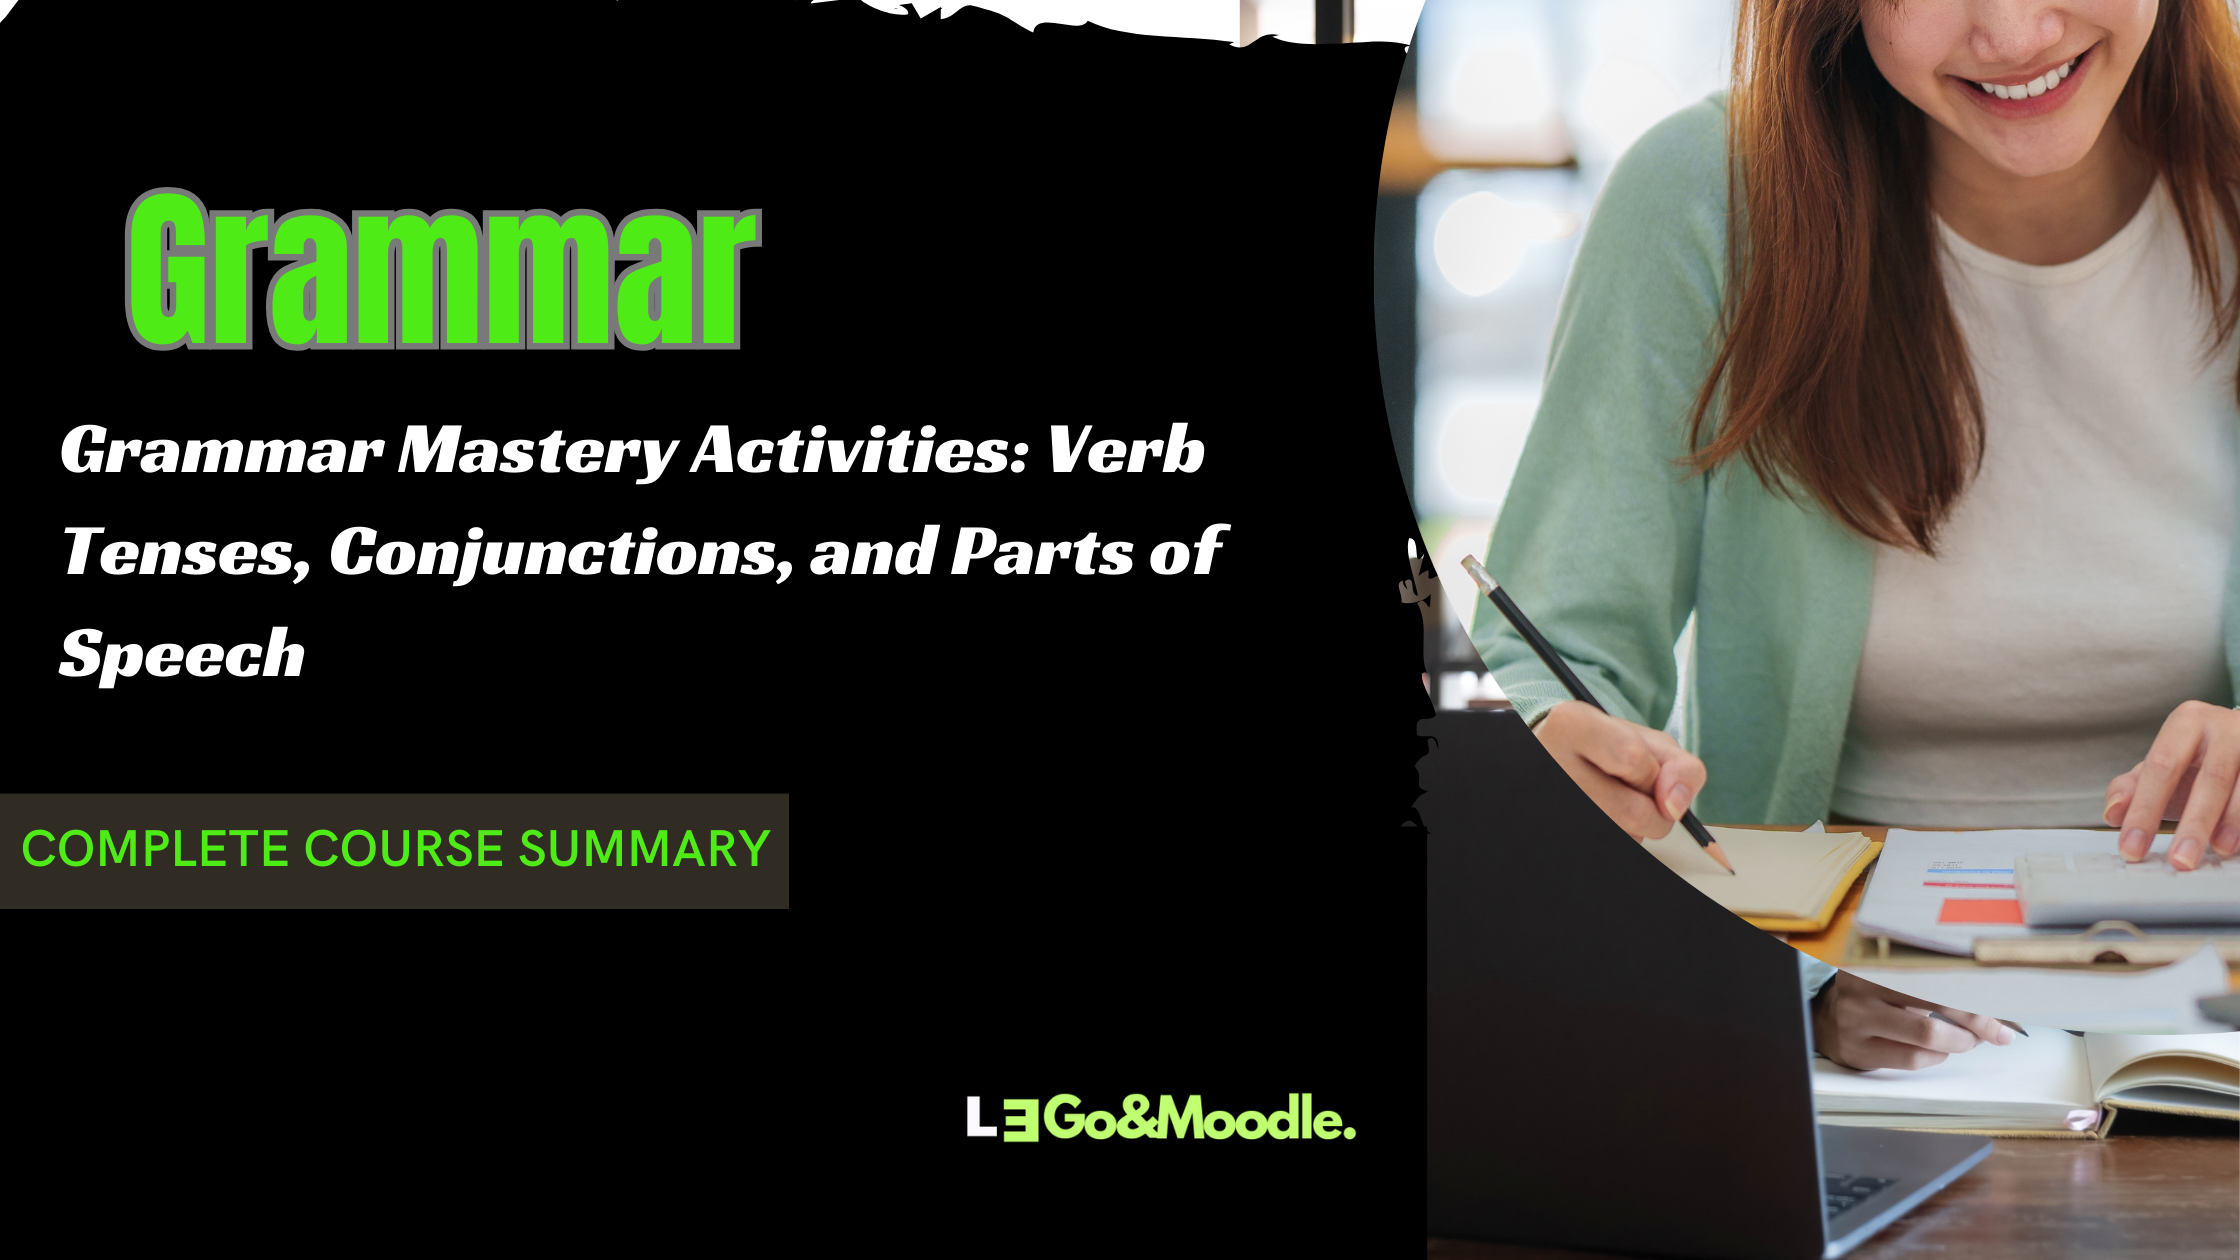 Grammar Mastery Activities: Verb Tenses, Conjunctions, and Parts of Speech,PART II